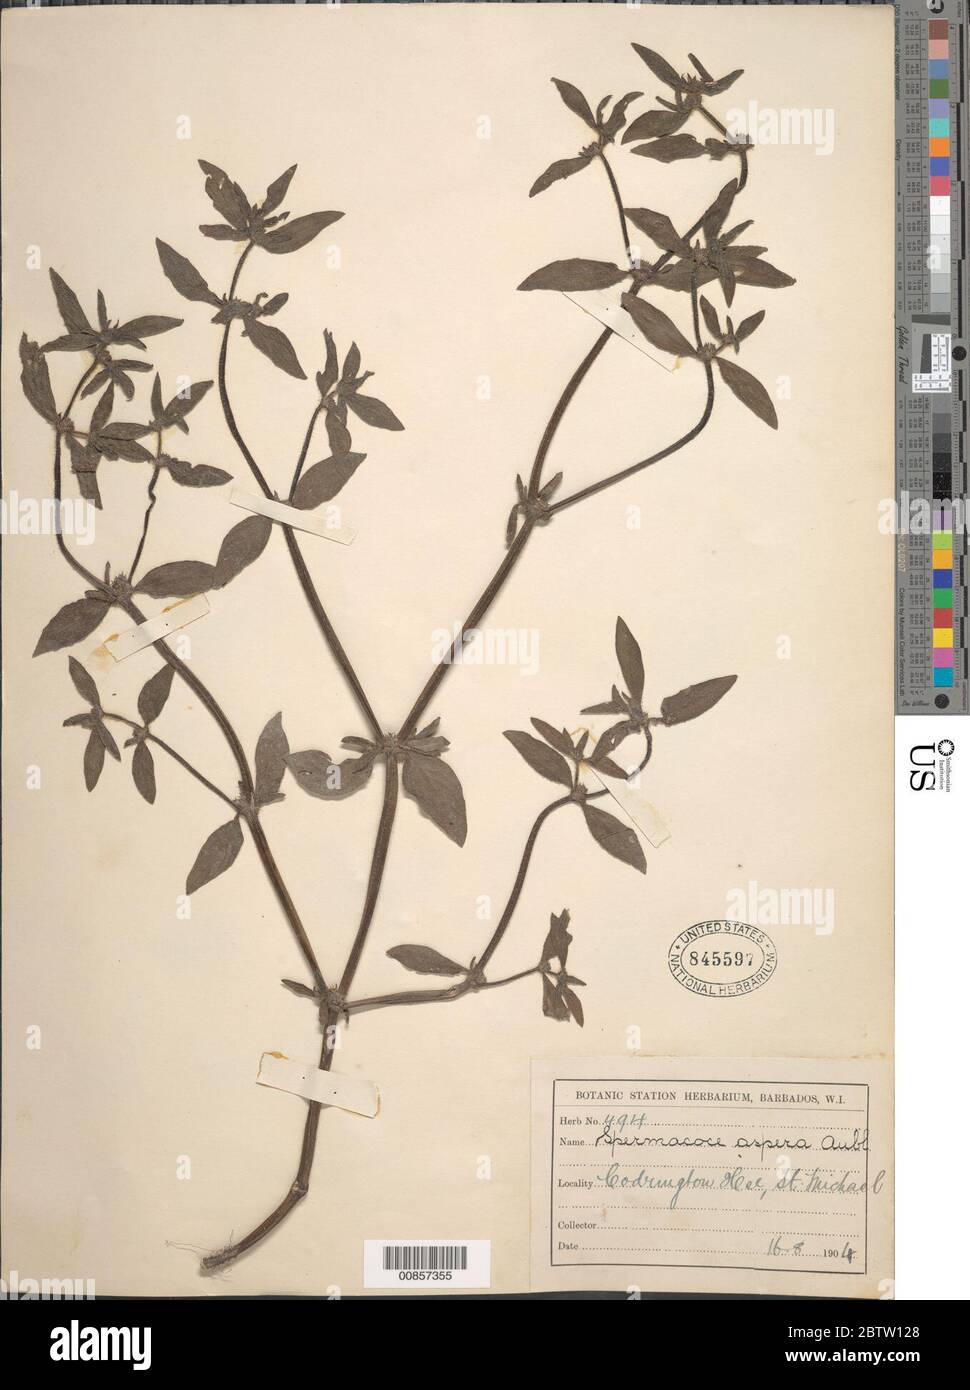 Spermacoce latifolia Aubl. Stock Photo